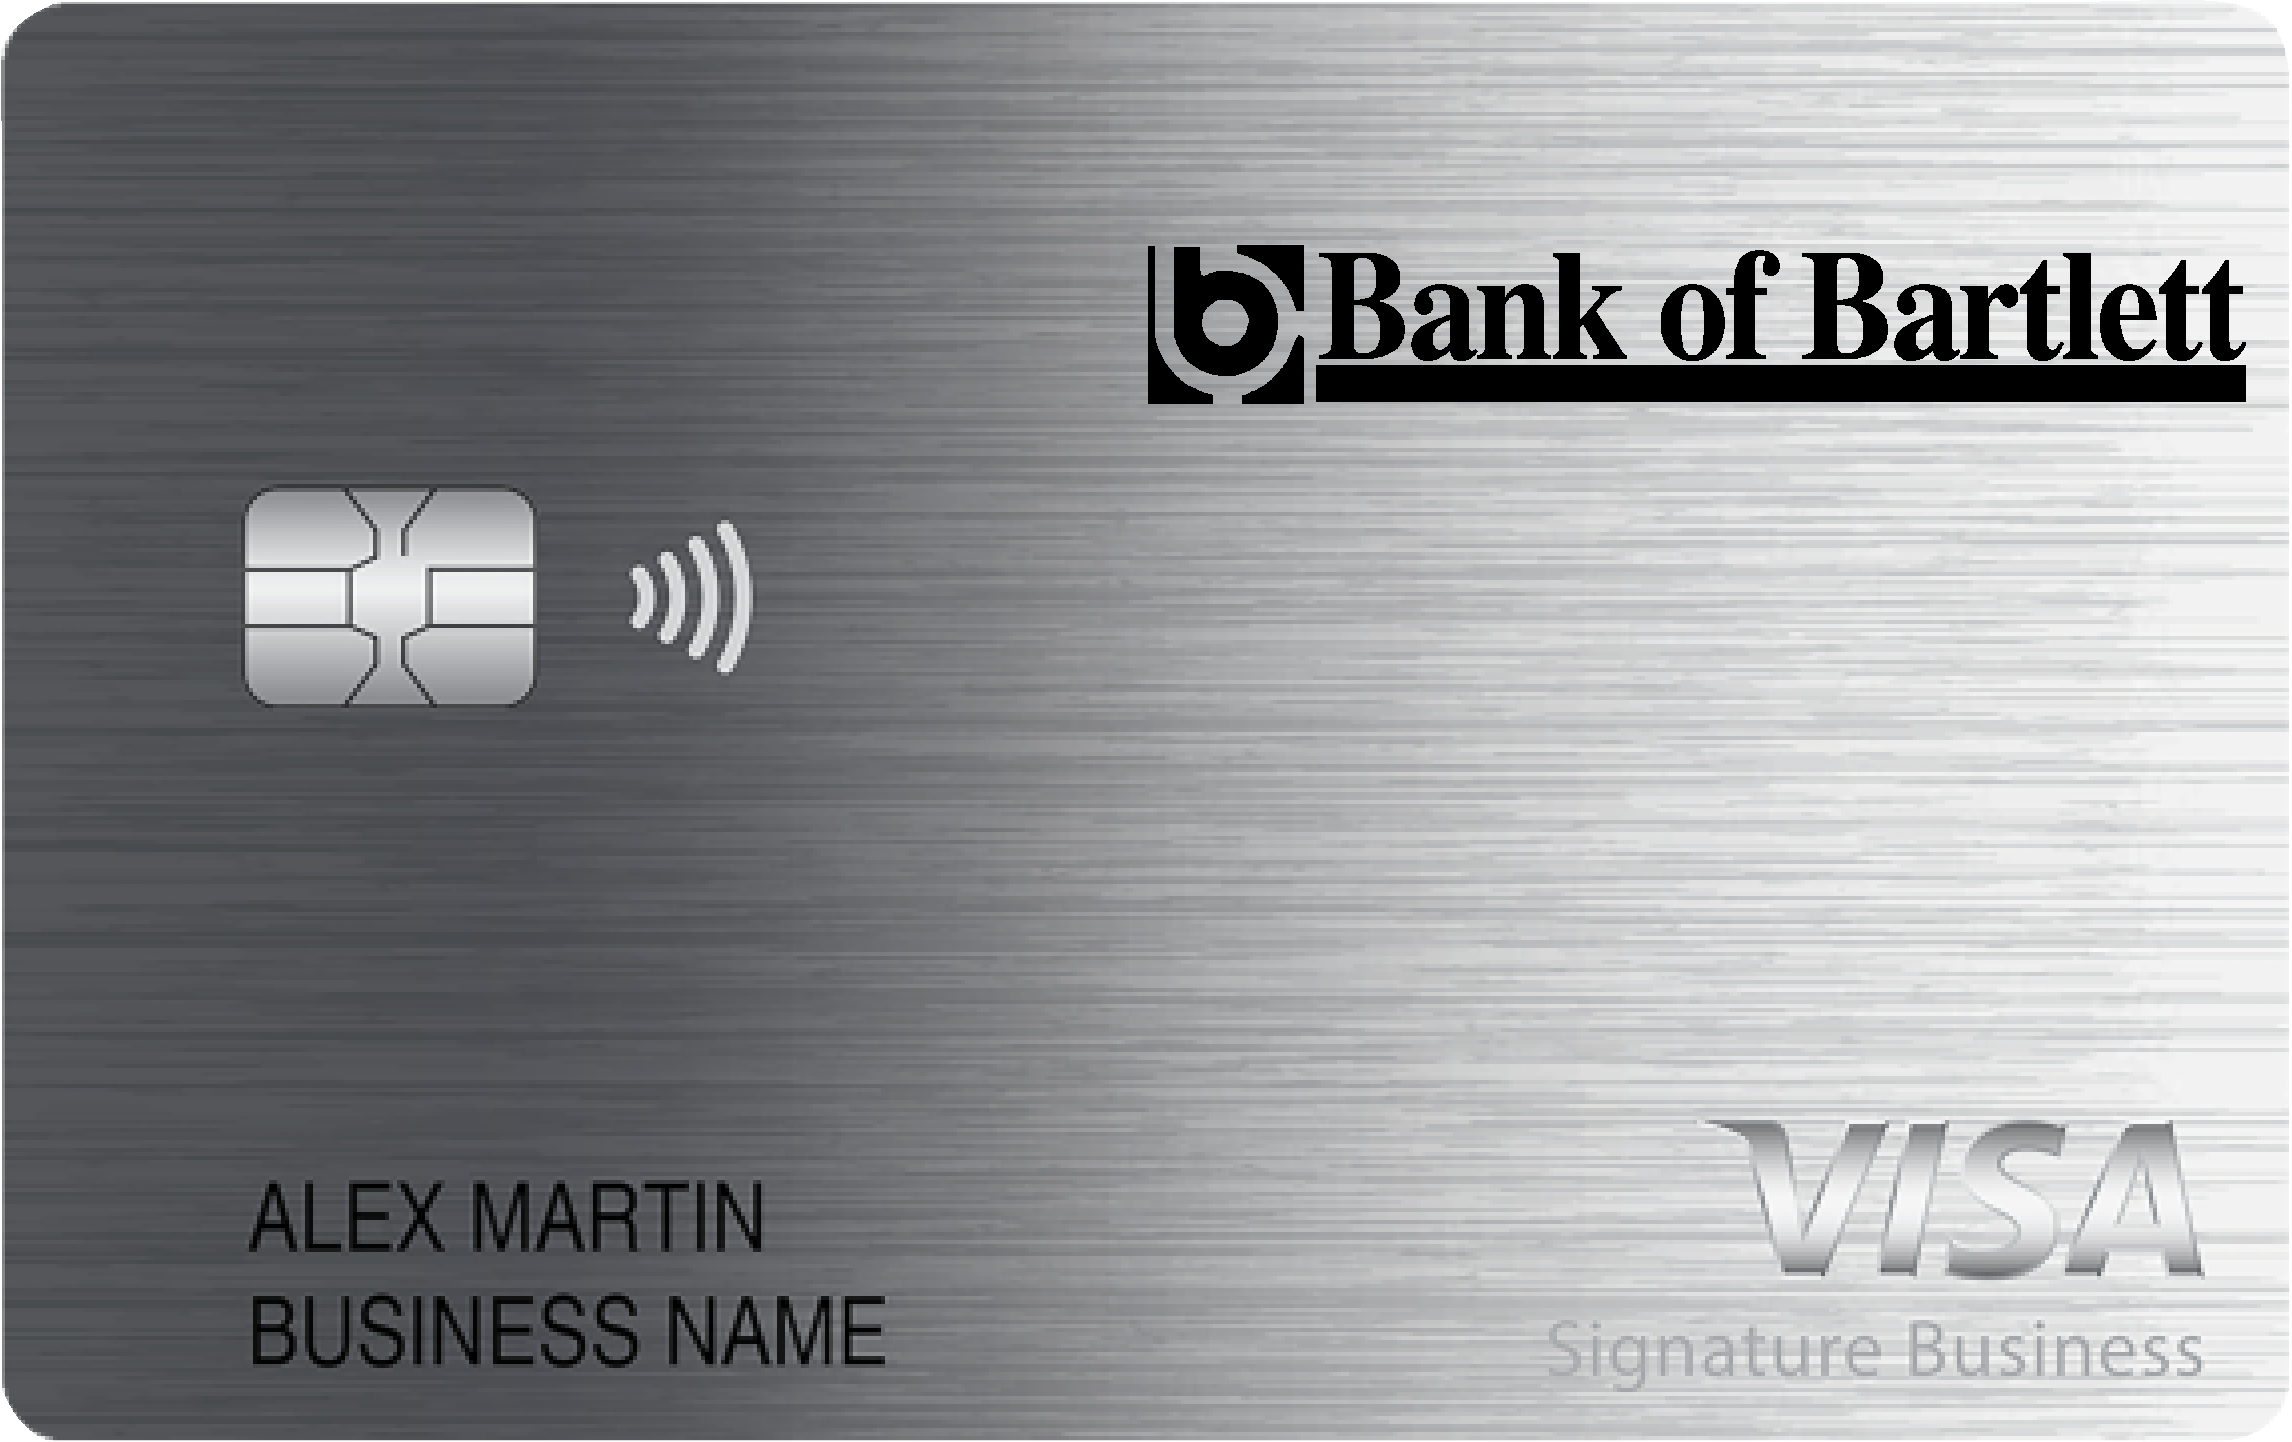 Bank of Bartlett Smart Business Rewards Card